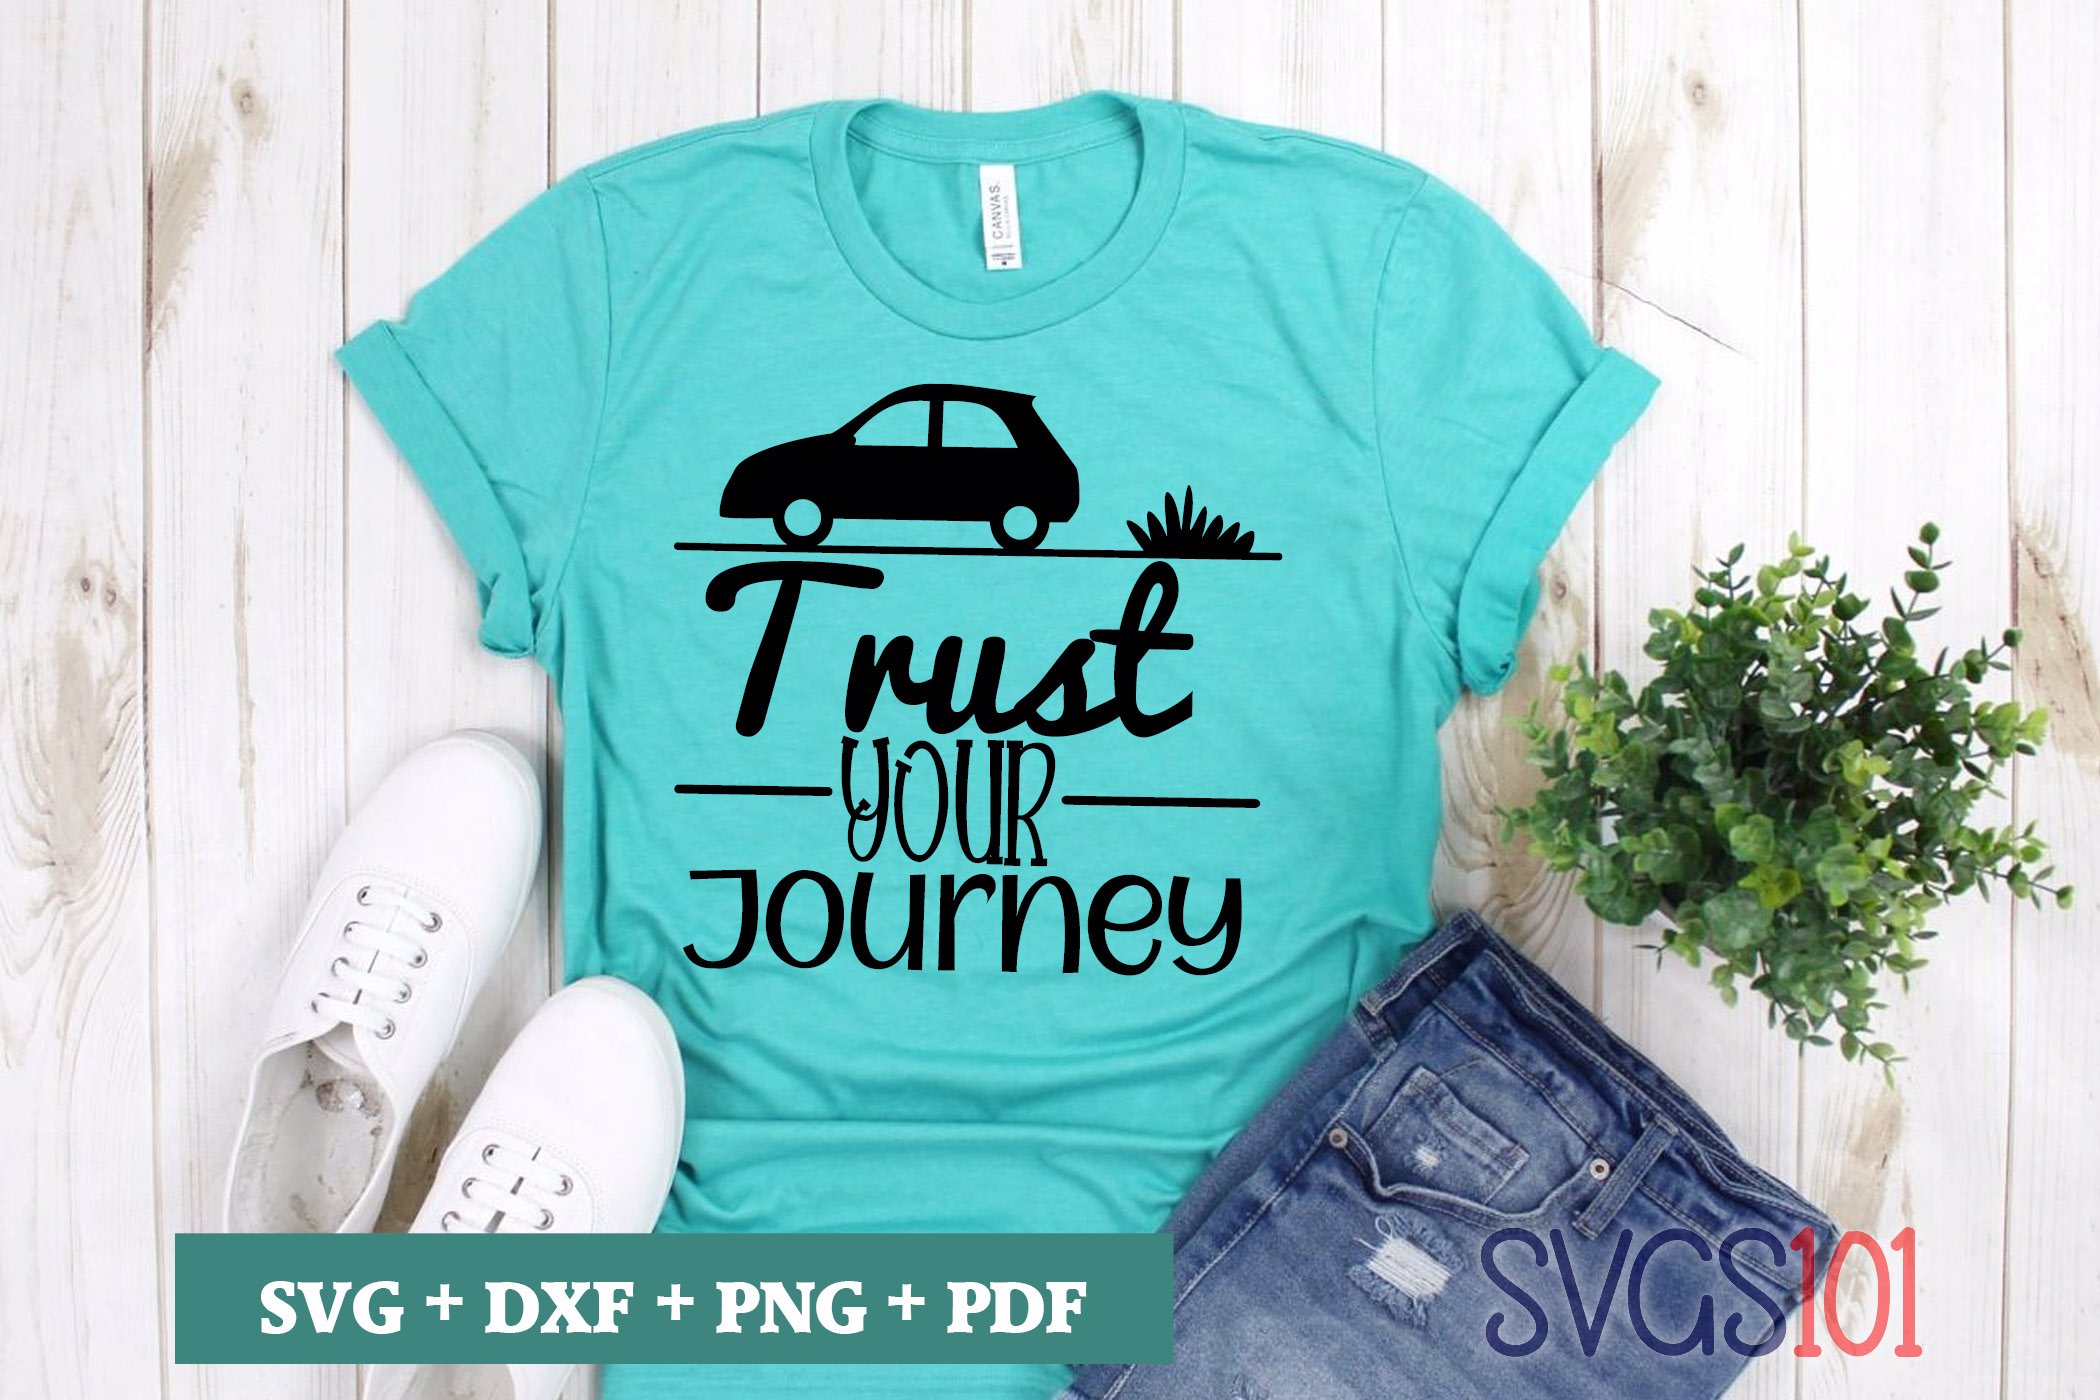 Trust Your Journey